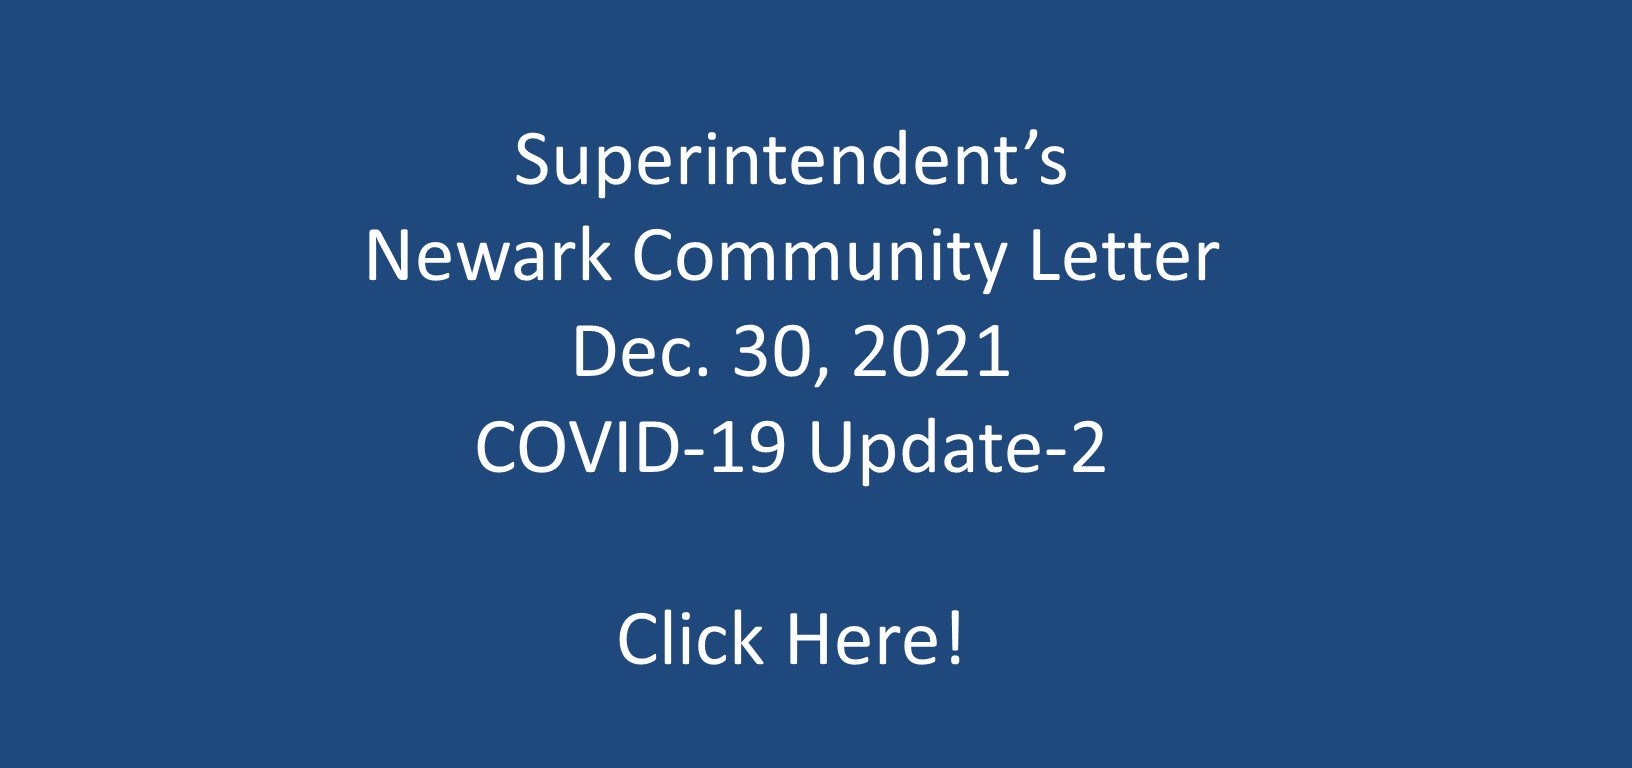 Superintendent Letter Dec 30 2021 COVID-19 Update 2